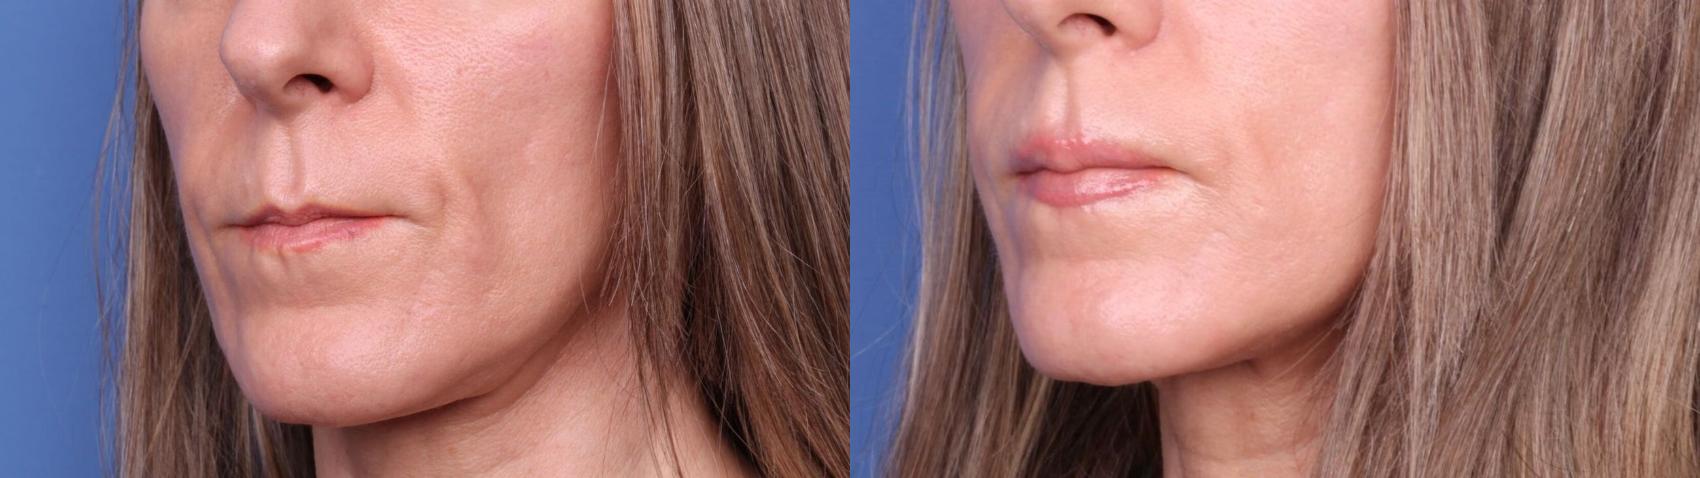 Surgical Lip Enhancement Before & After Photo | Scottsdale, AZ | Hobgood Facial Plastic Surgery: Todd Hobgood, MD